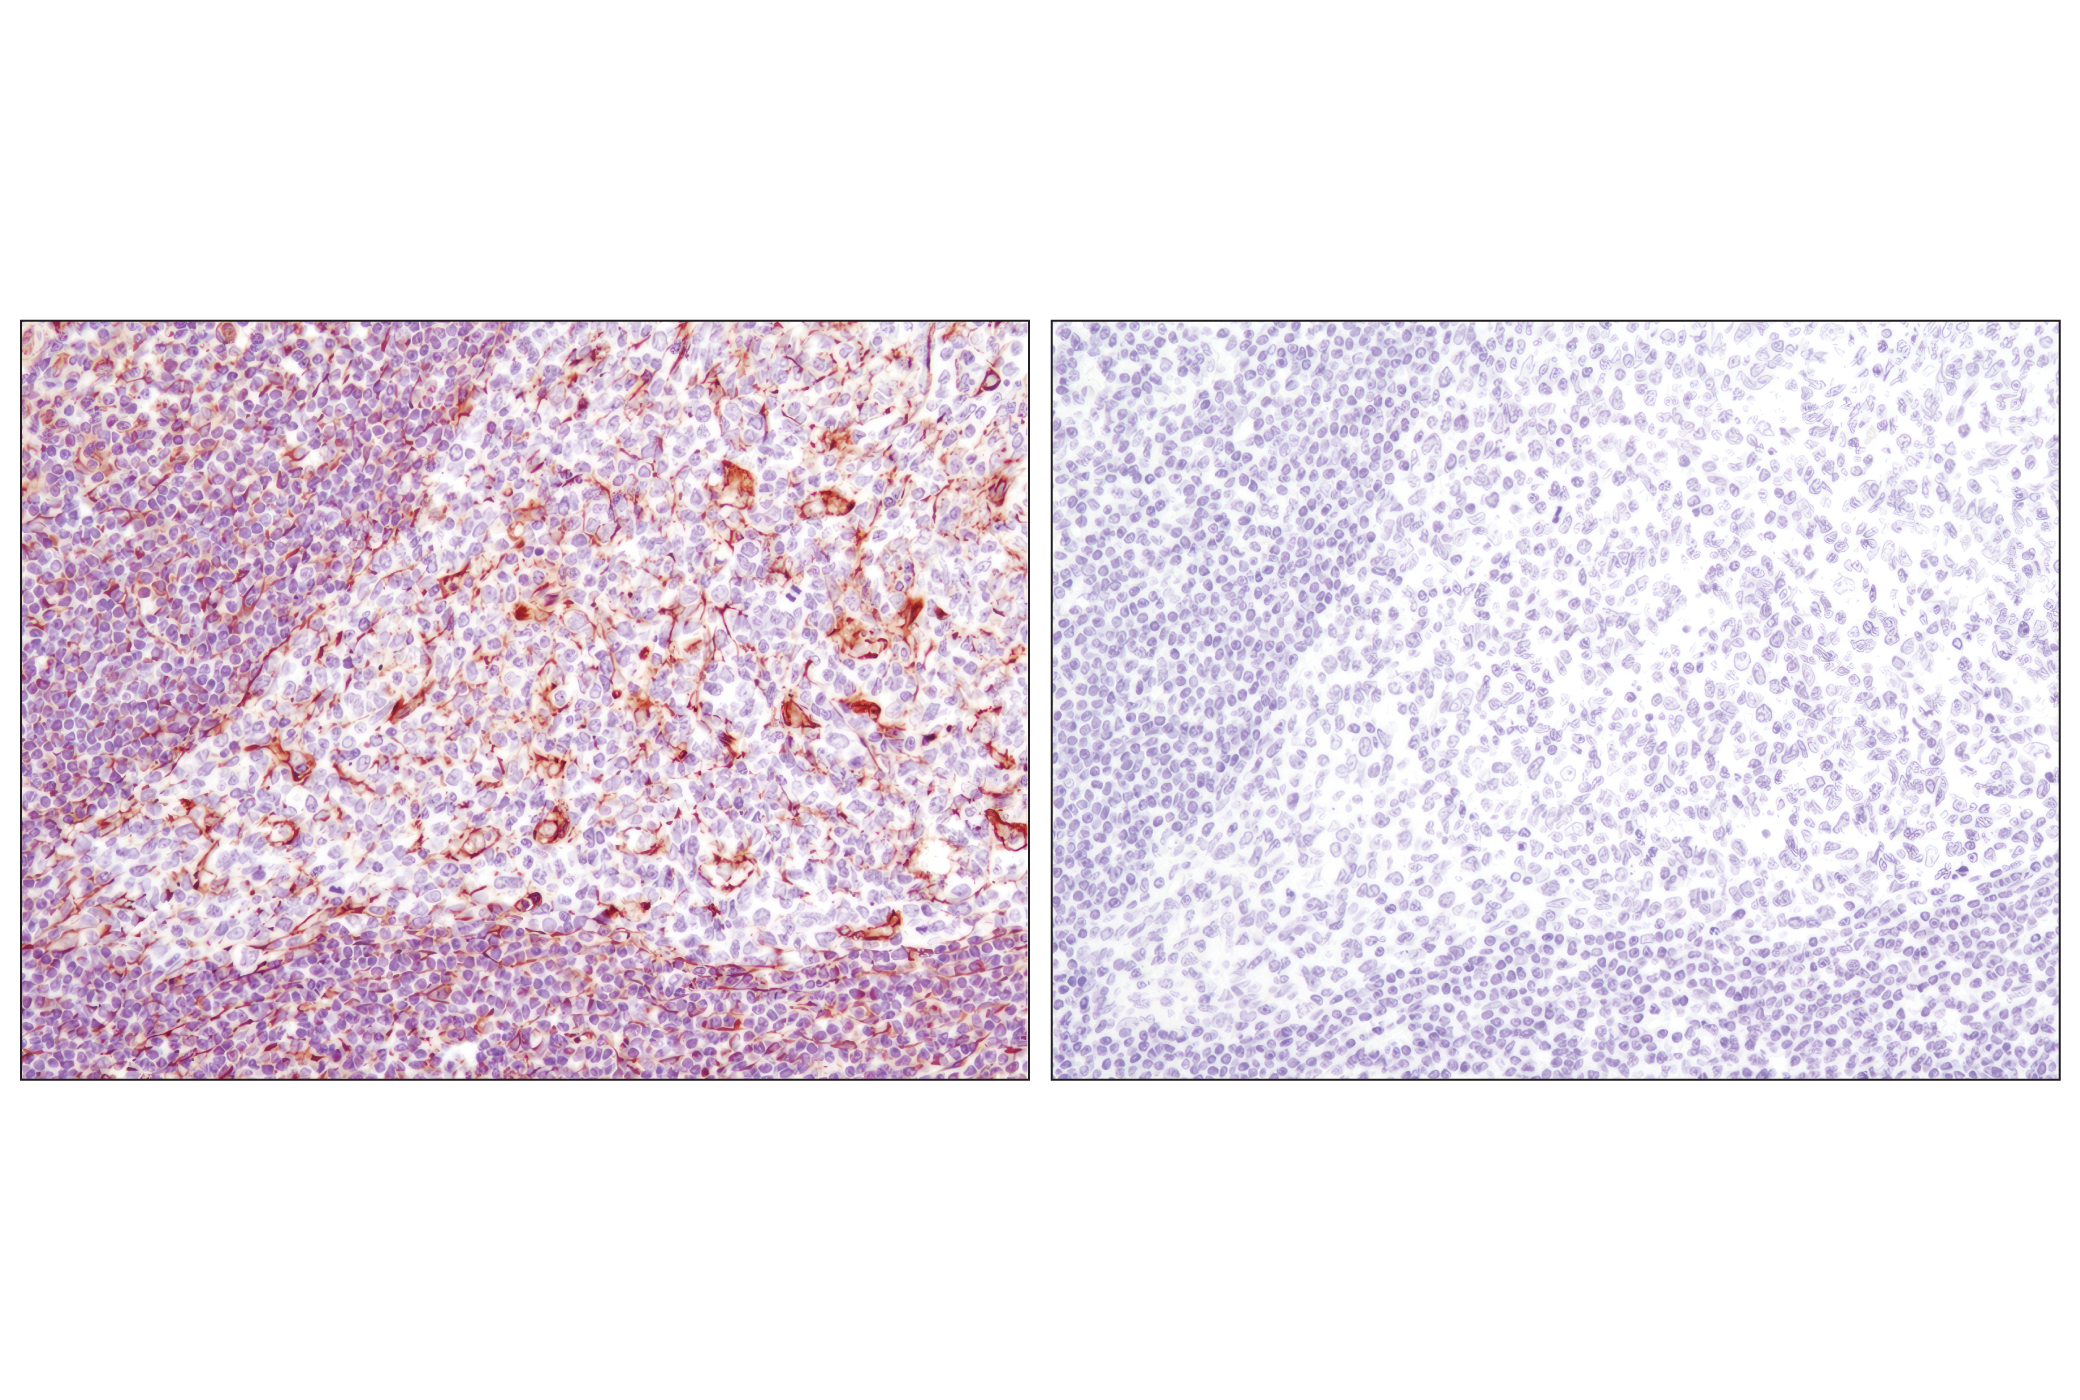  Image 48: Cytoskeletal Marker Antibody Sampler Kit